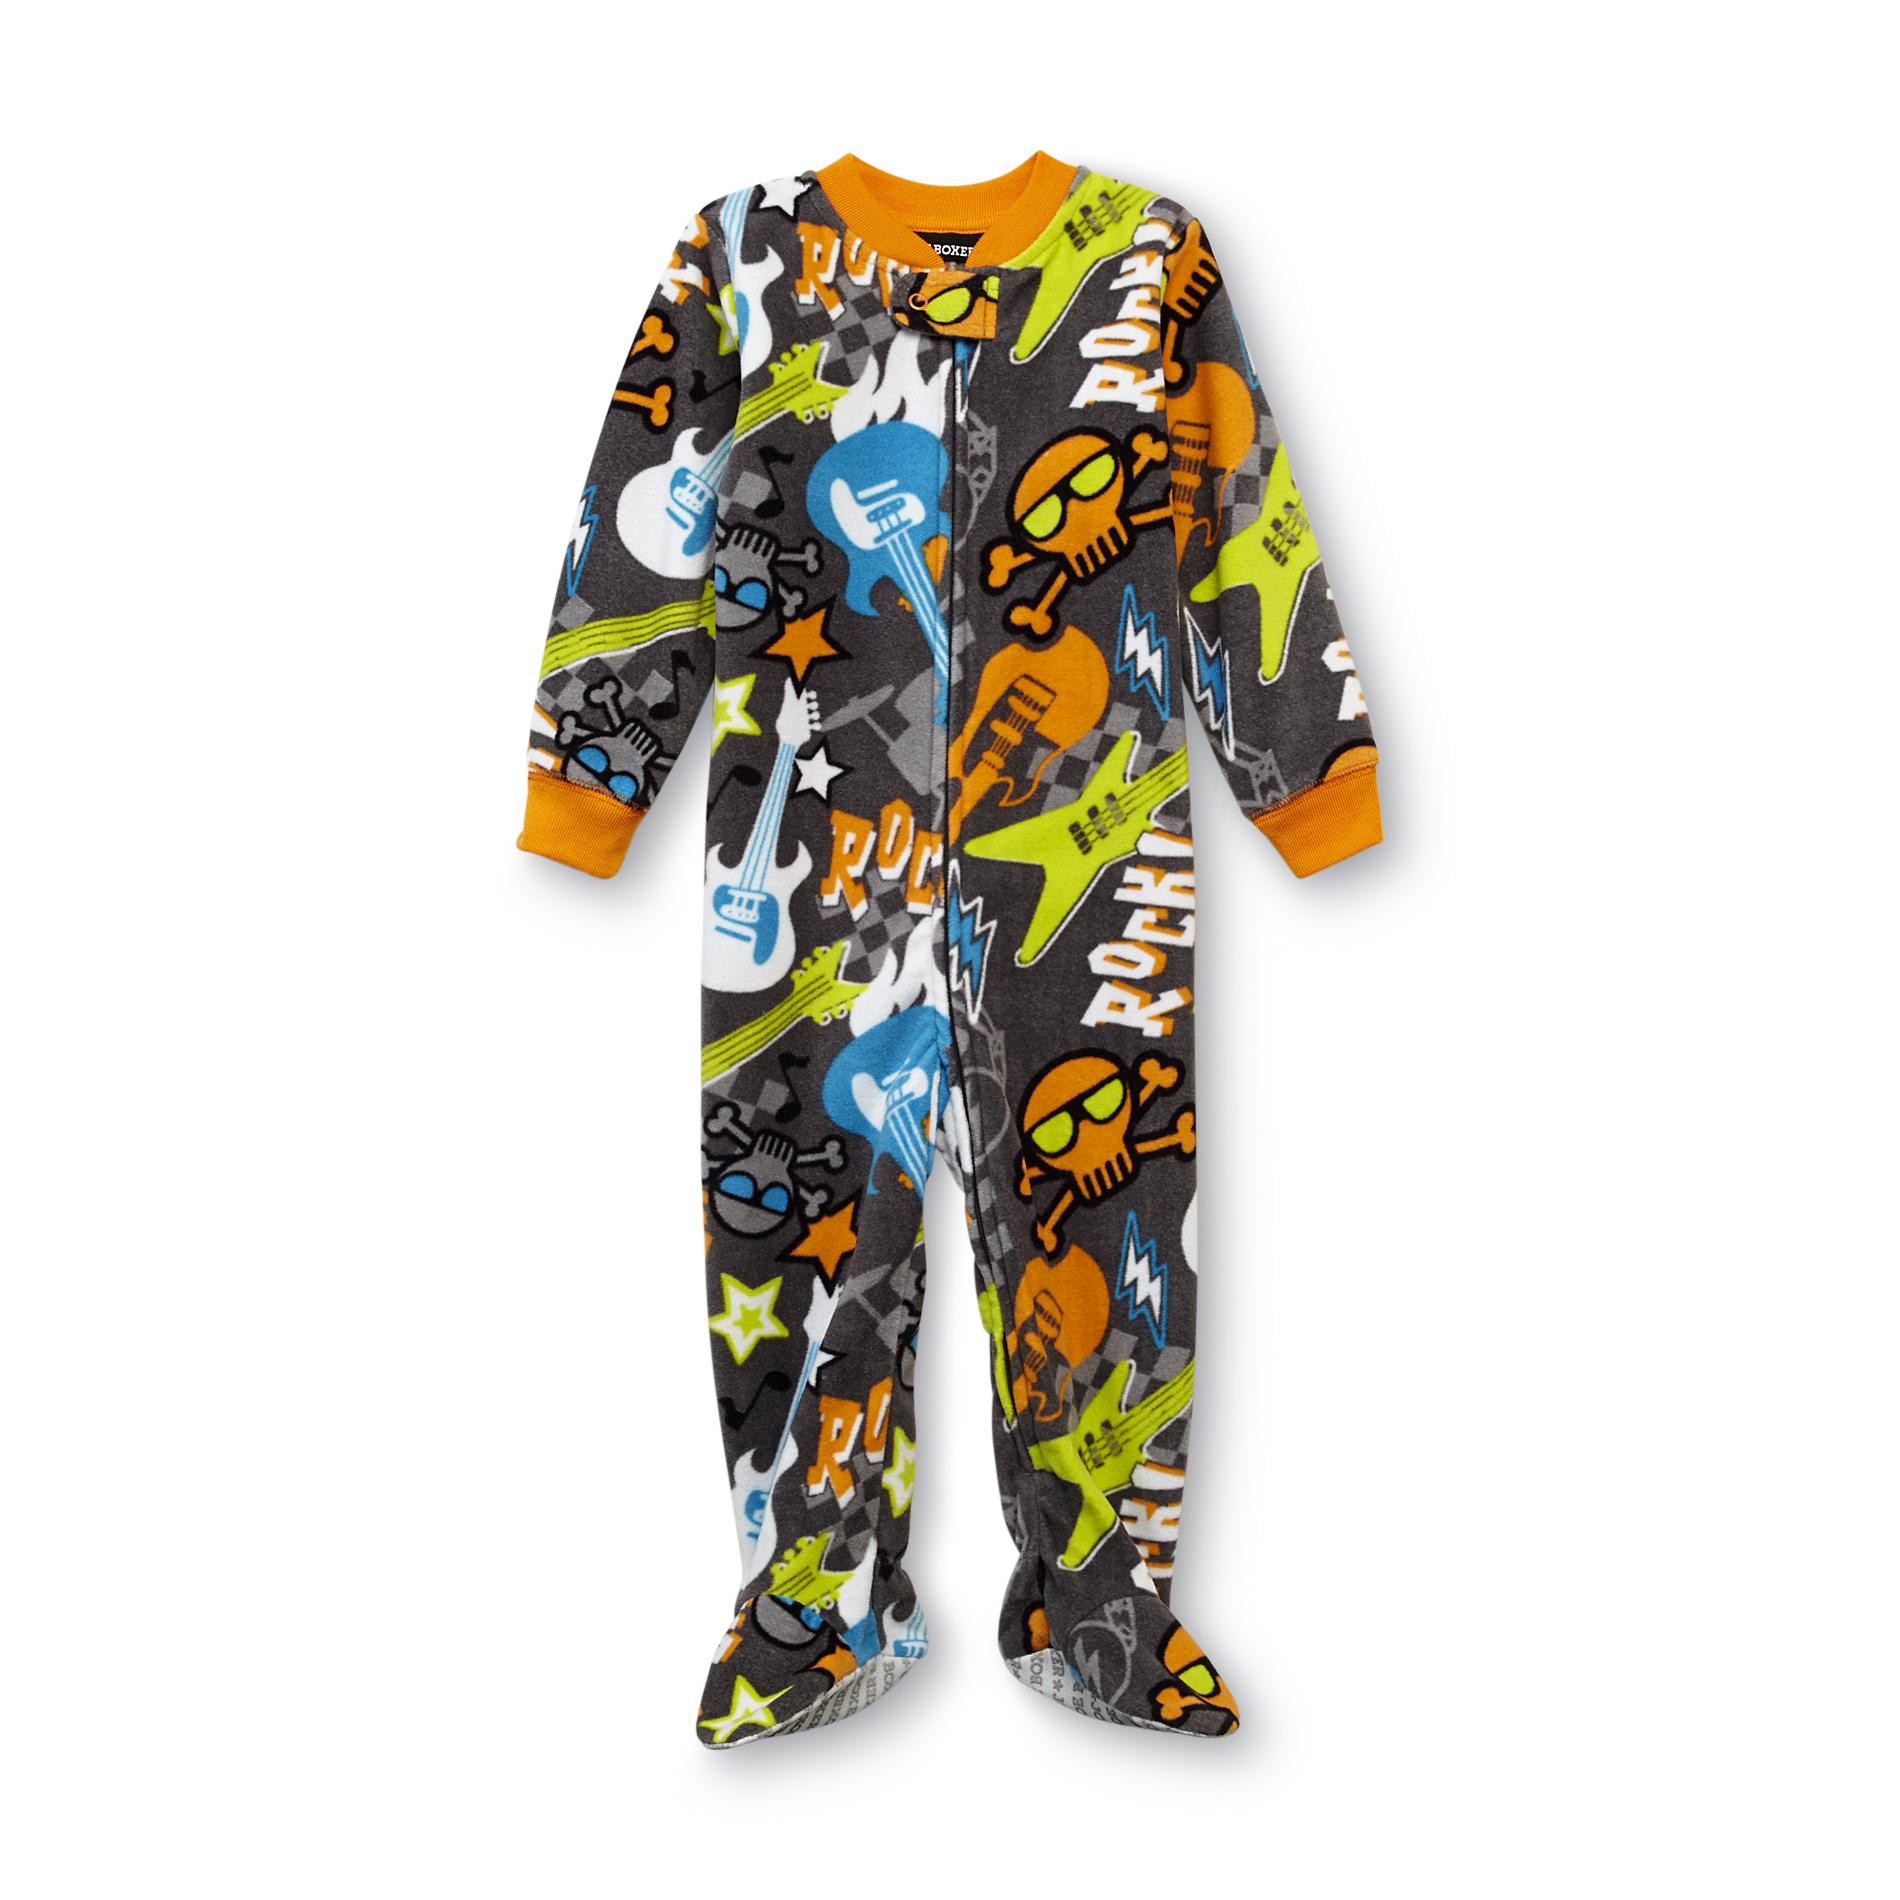 Joe Boxer Infant & Toddler Boy's Footed Sleeper Pajamas - Guitar & Skull